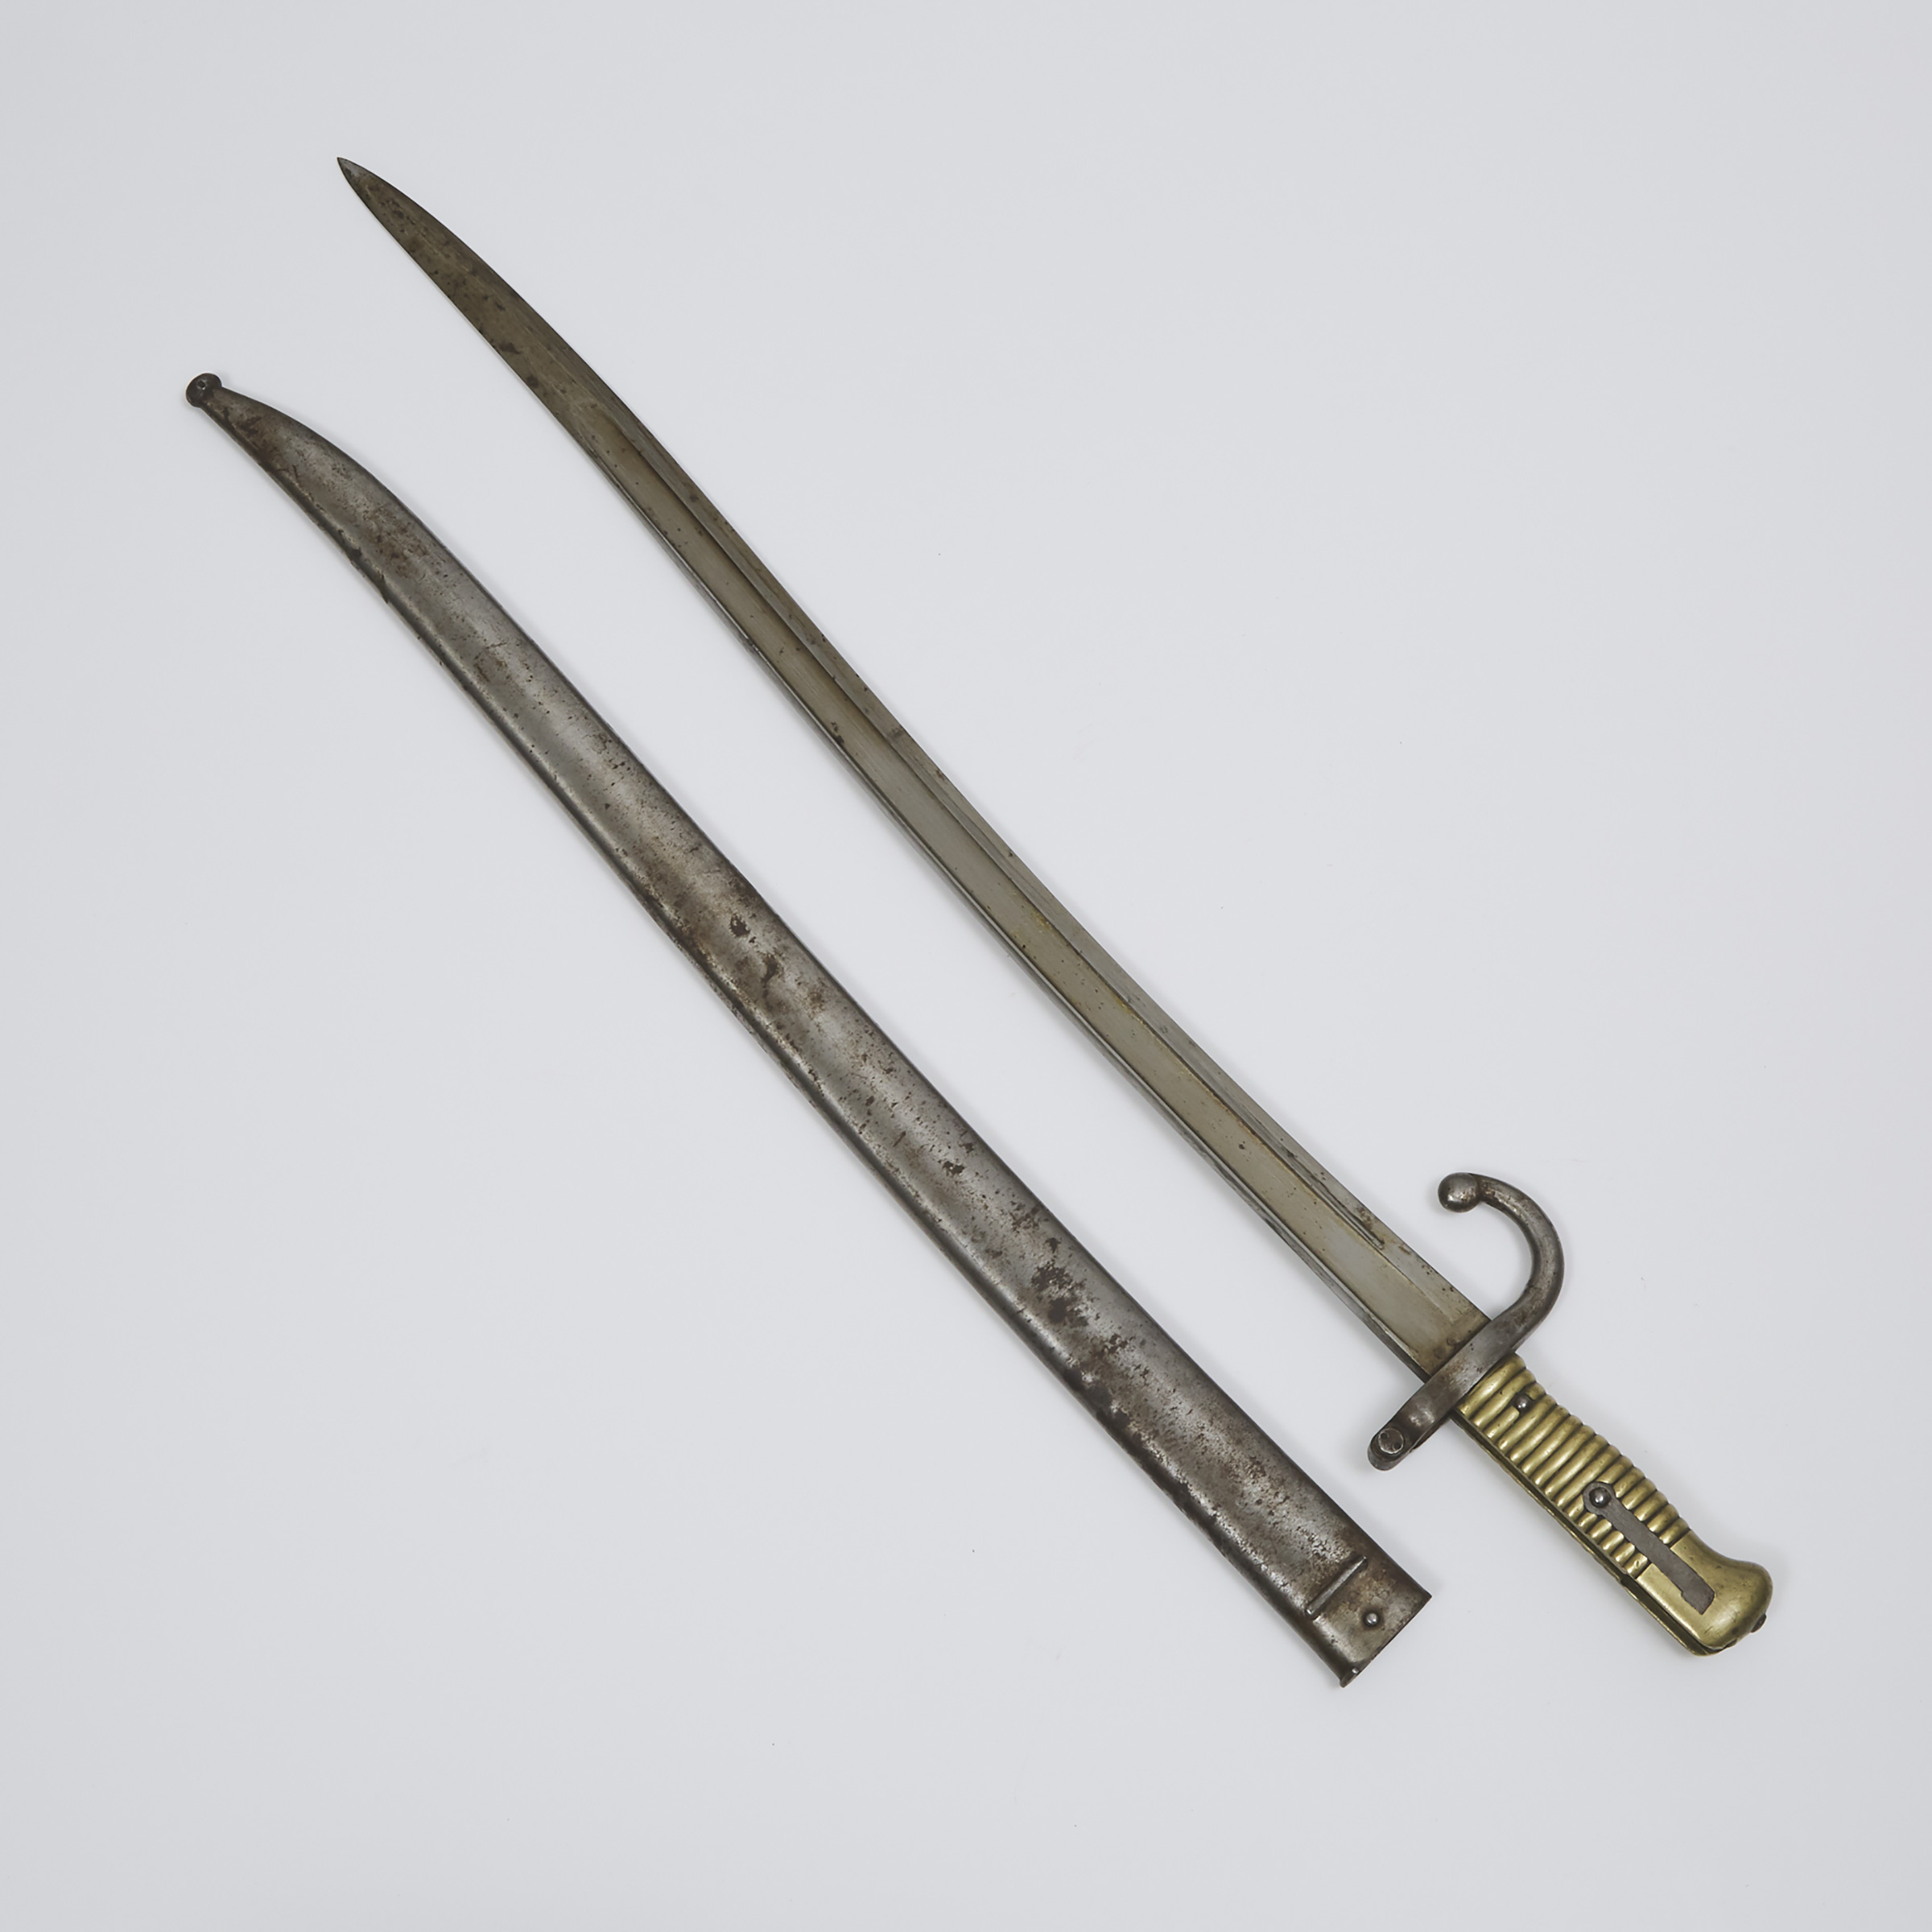 French Model 1866 Chassepot Sword Bayonet, mid 19th century